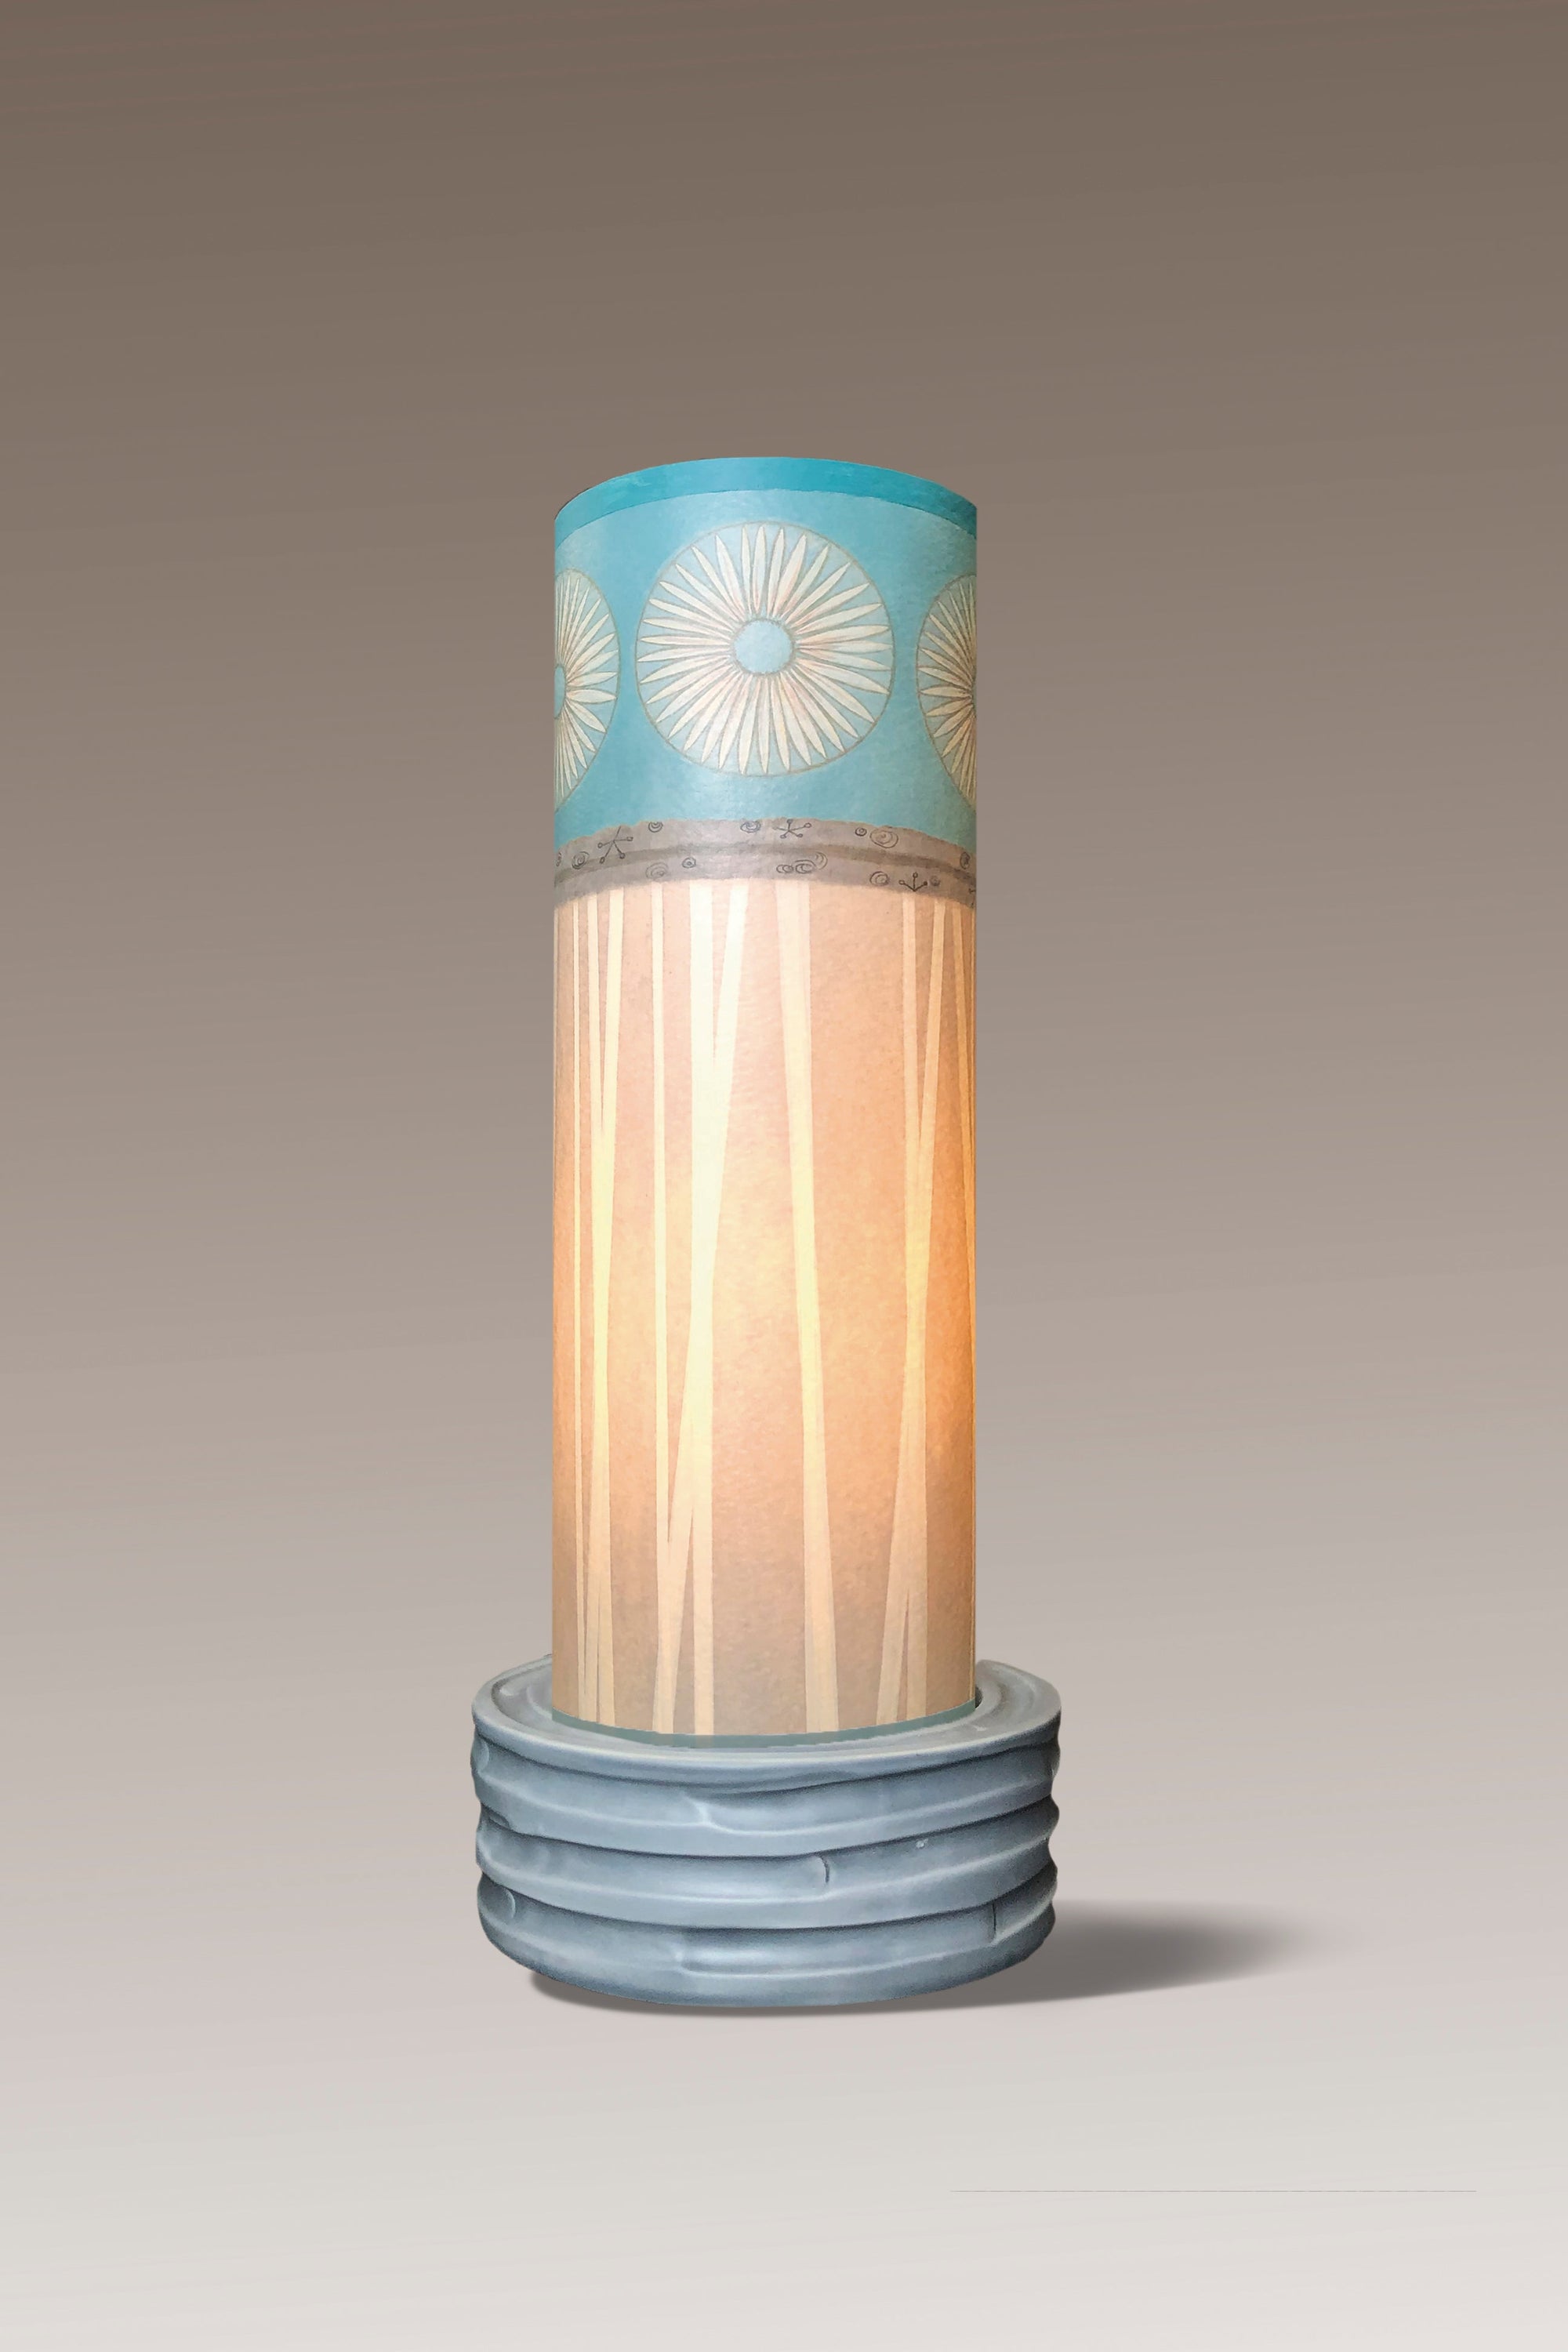 Janna Ugone & Co Luminaires Ceramic Luminaire Accent Lamp with Pool Shade